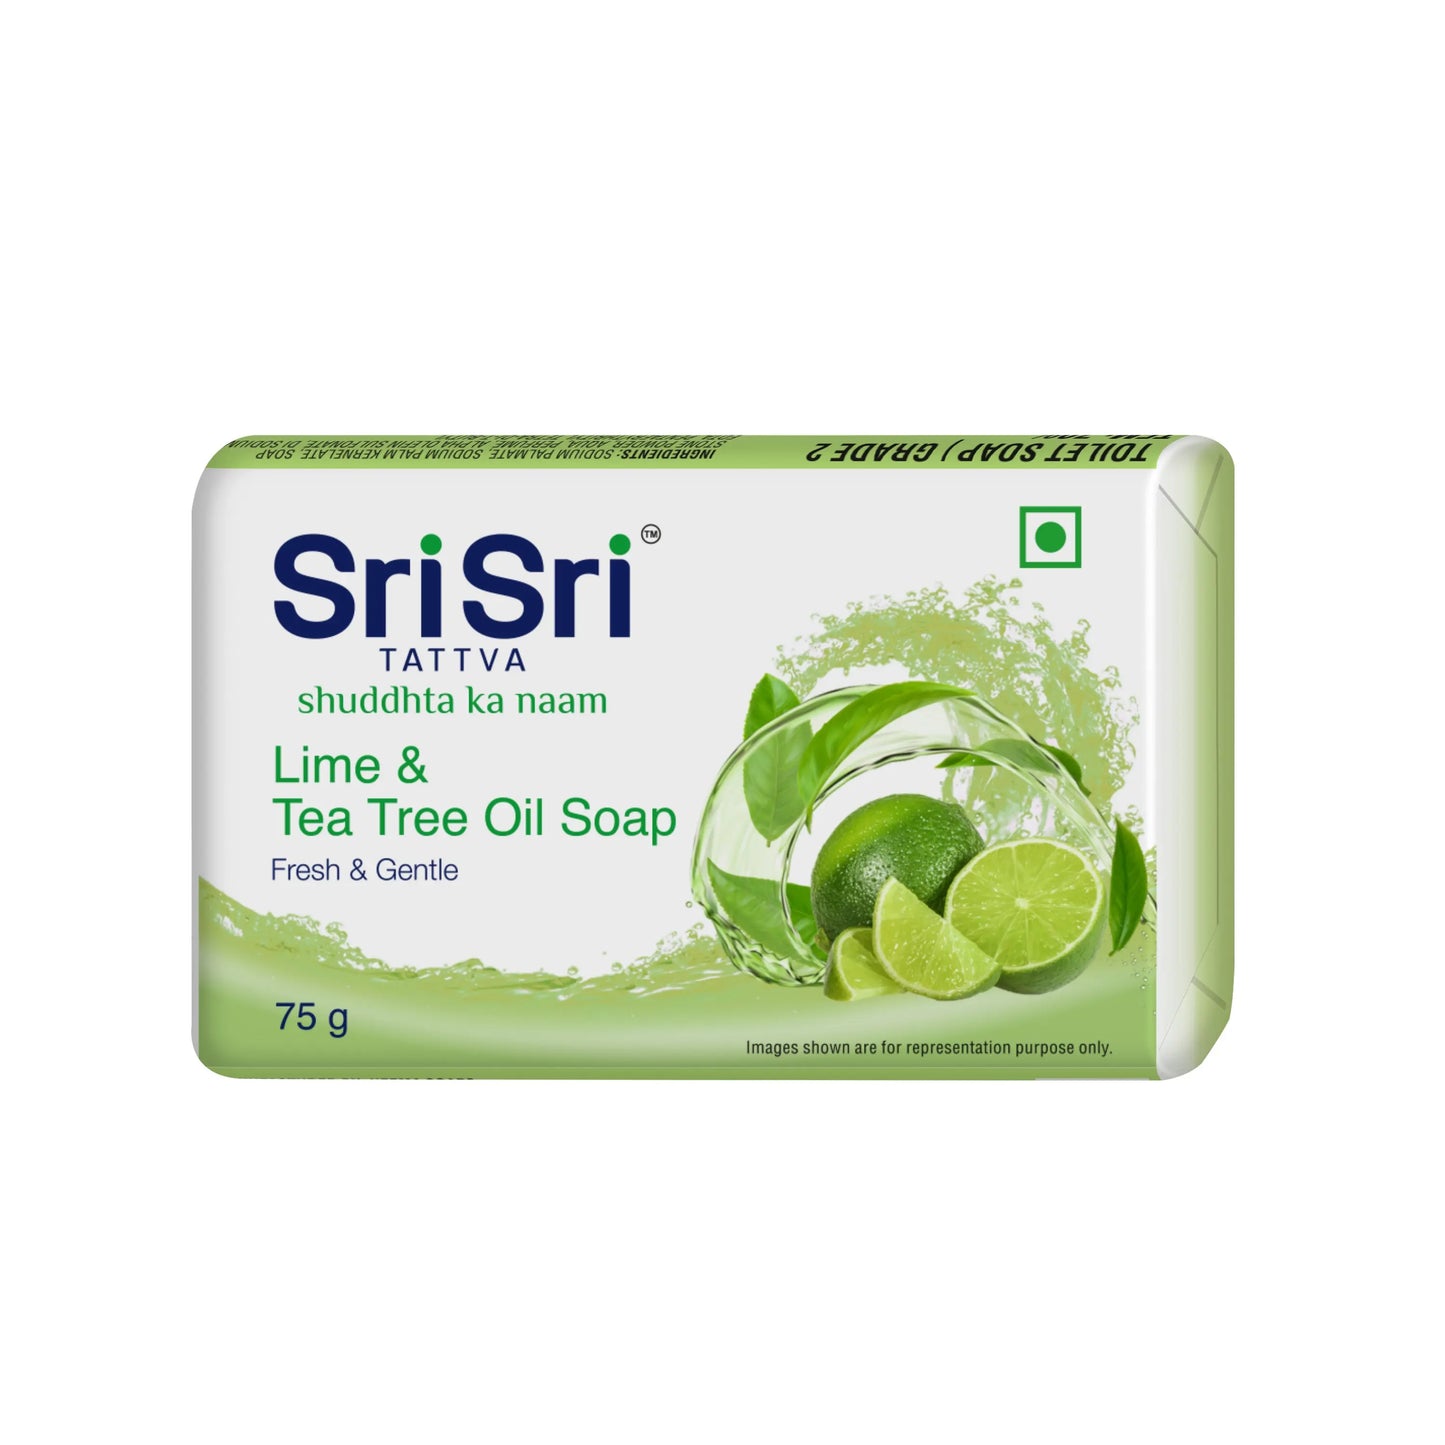 Lime & Tea Tree Oil Soap | Fresh & Gentle | Buy 3 Get 1 Free | 75 g Each